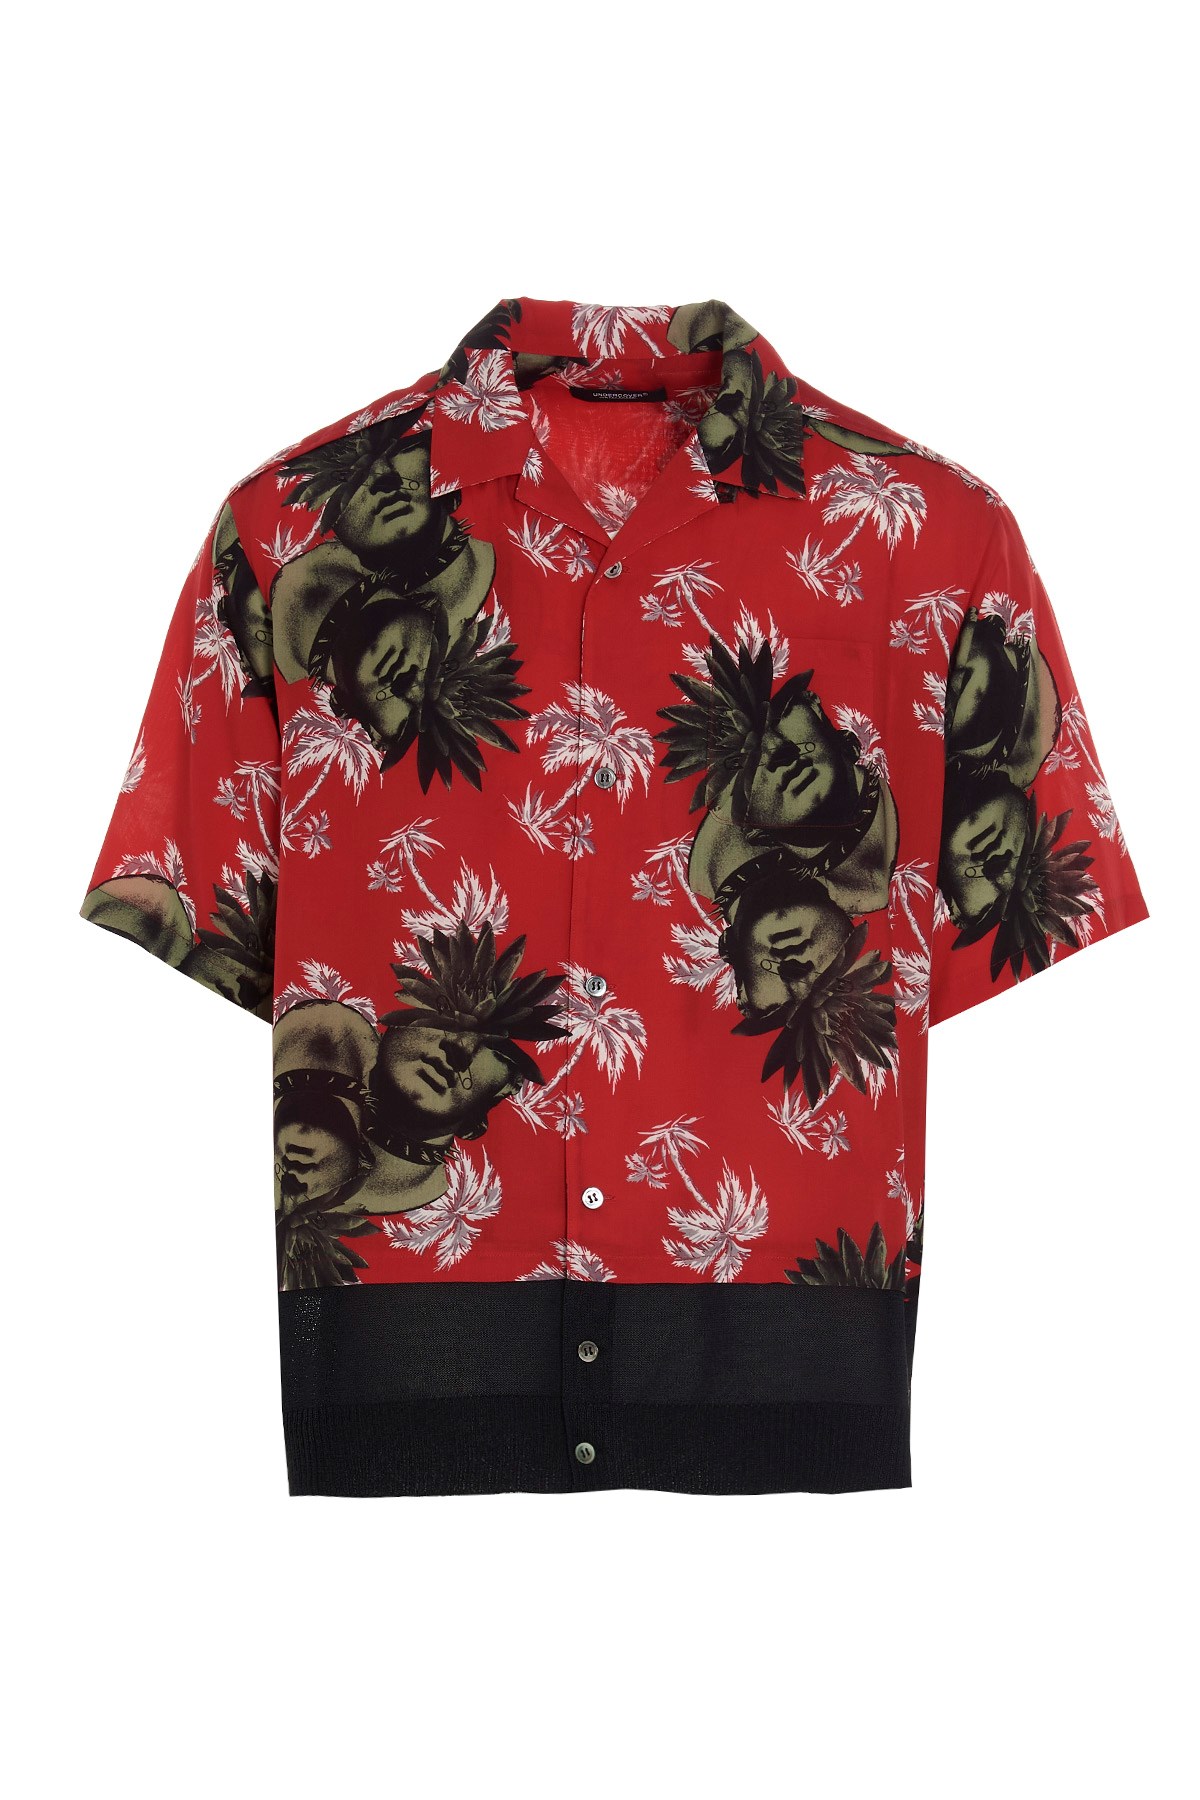 UNDERCOVER 'Palm’ Print Shirt